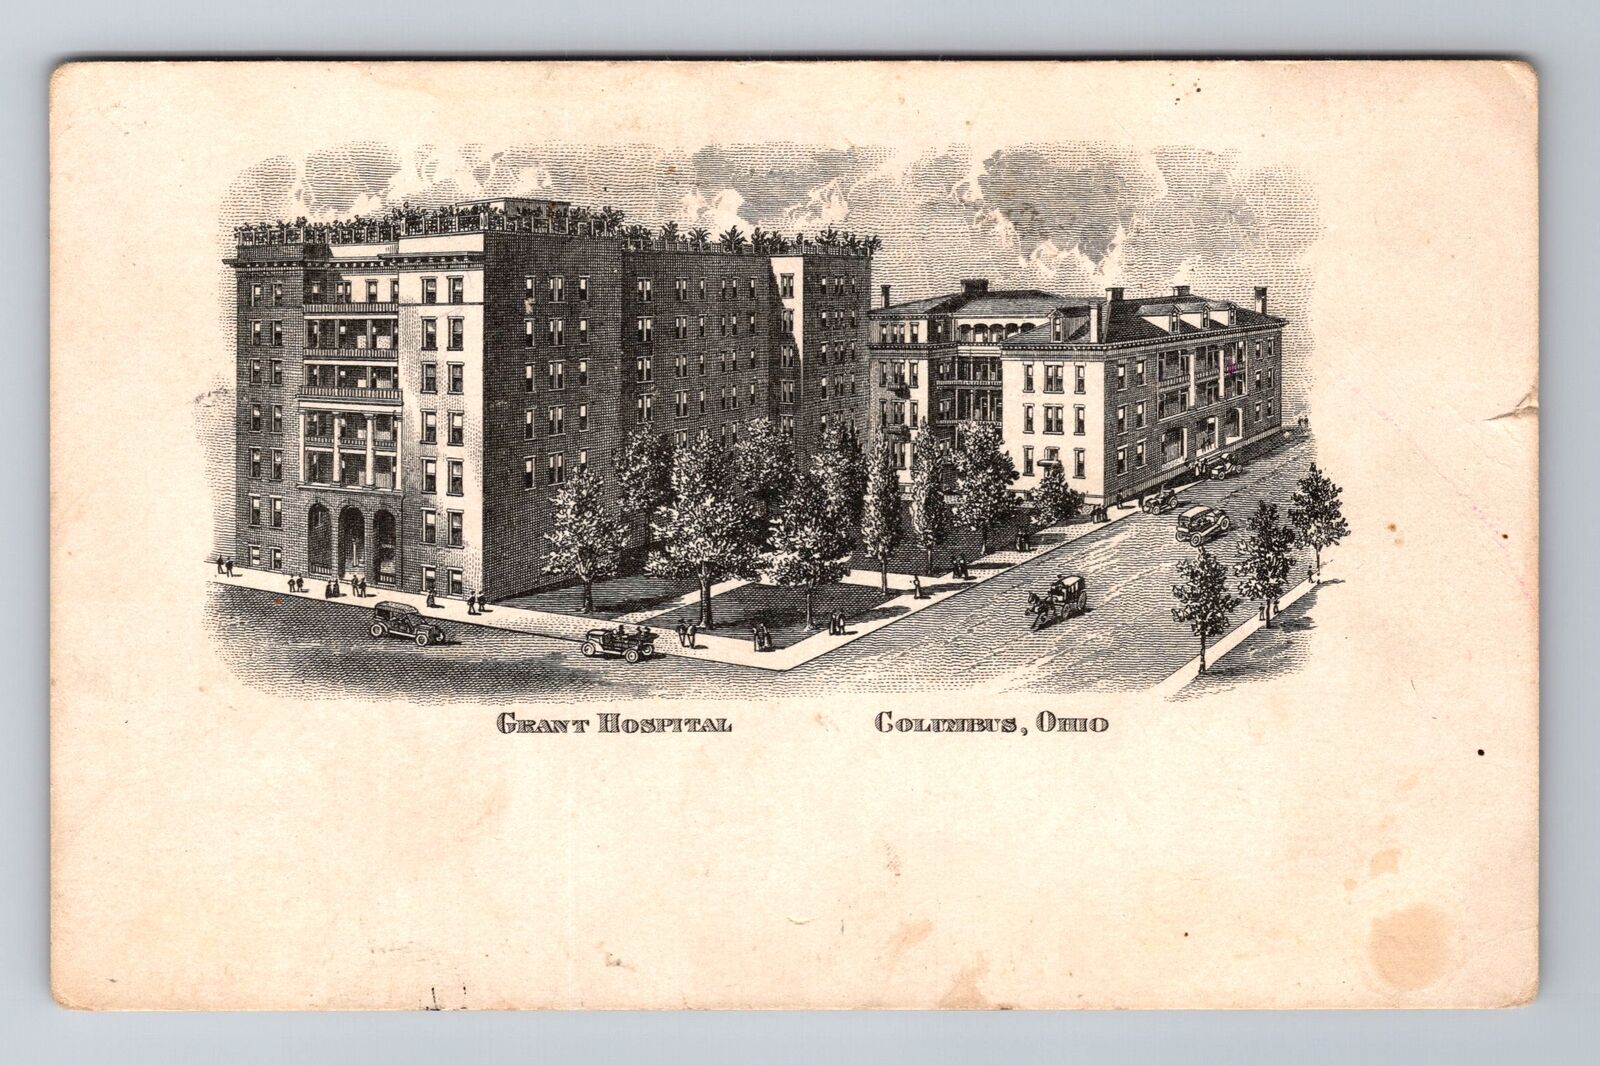 Columbus OH-Ohio, Grant Hospital, Antique, Vintage c1921 Souvenir Postcard